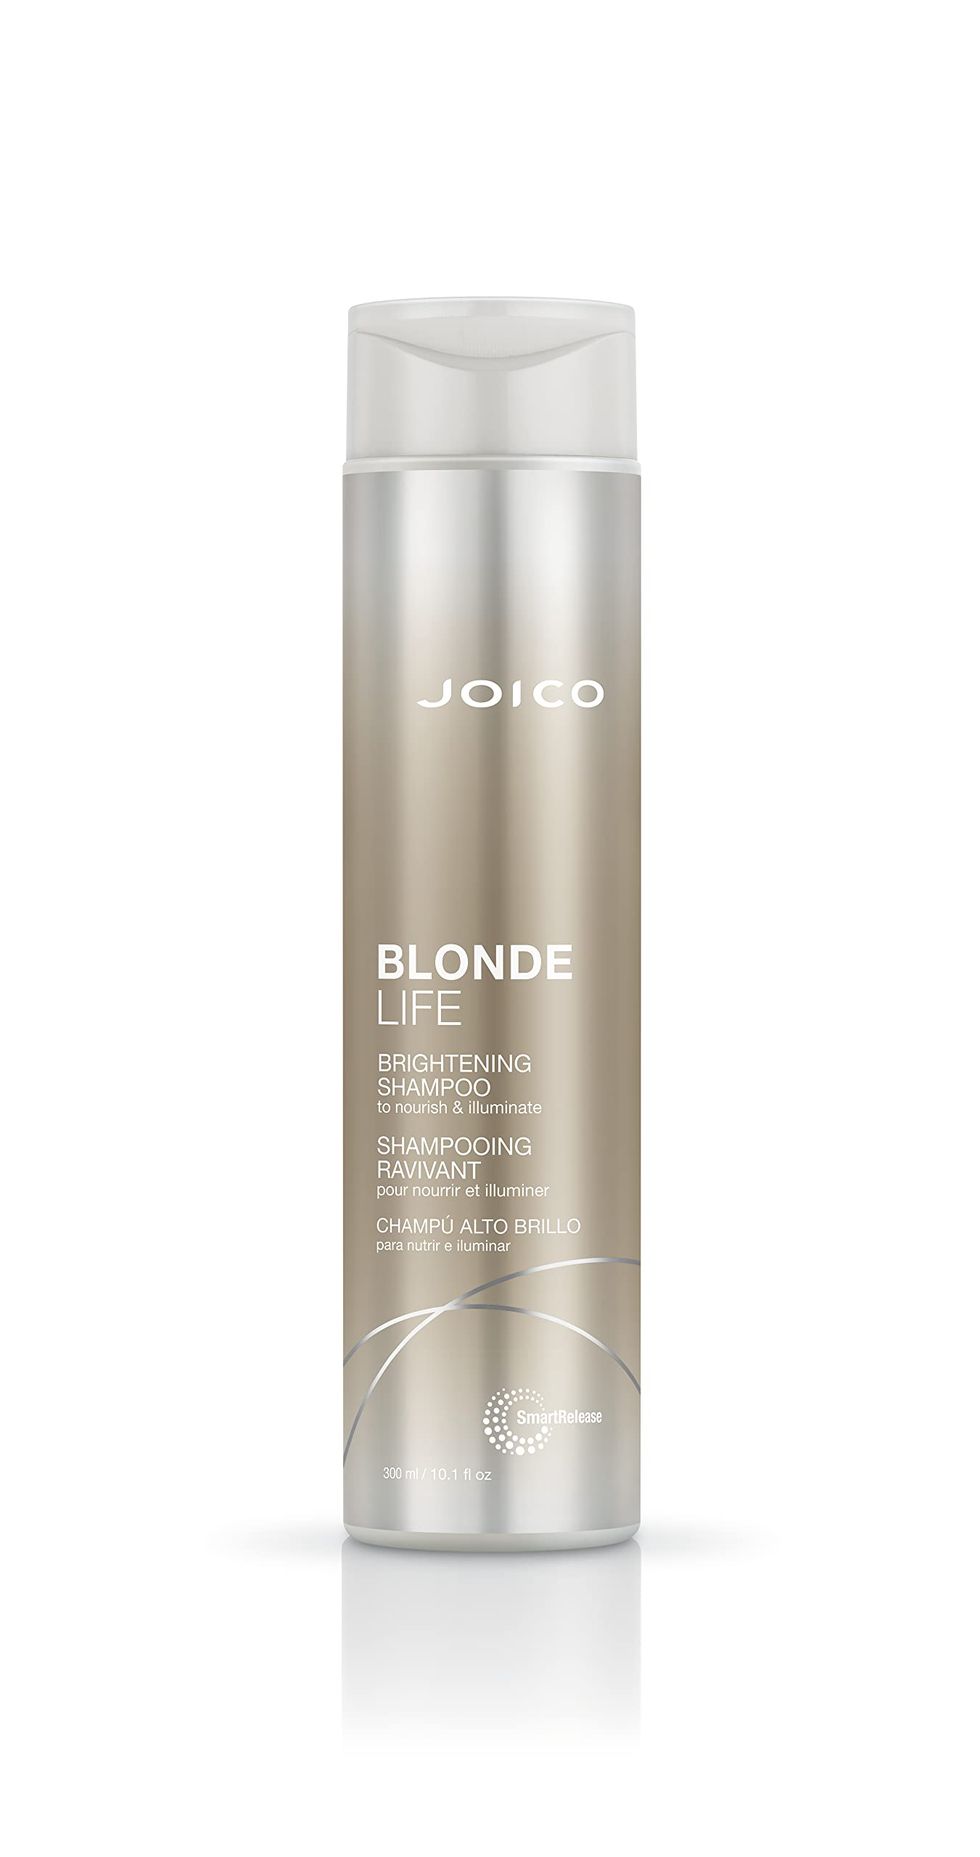 Blonde Life Brightening Shampoo 